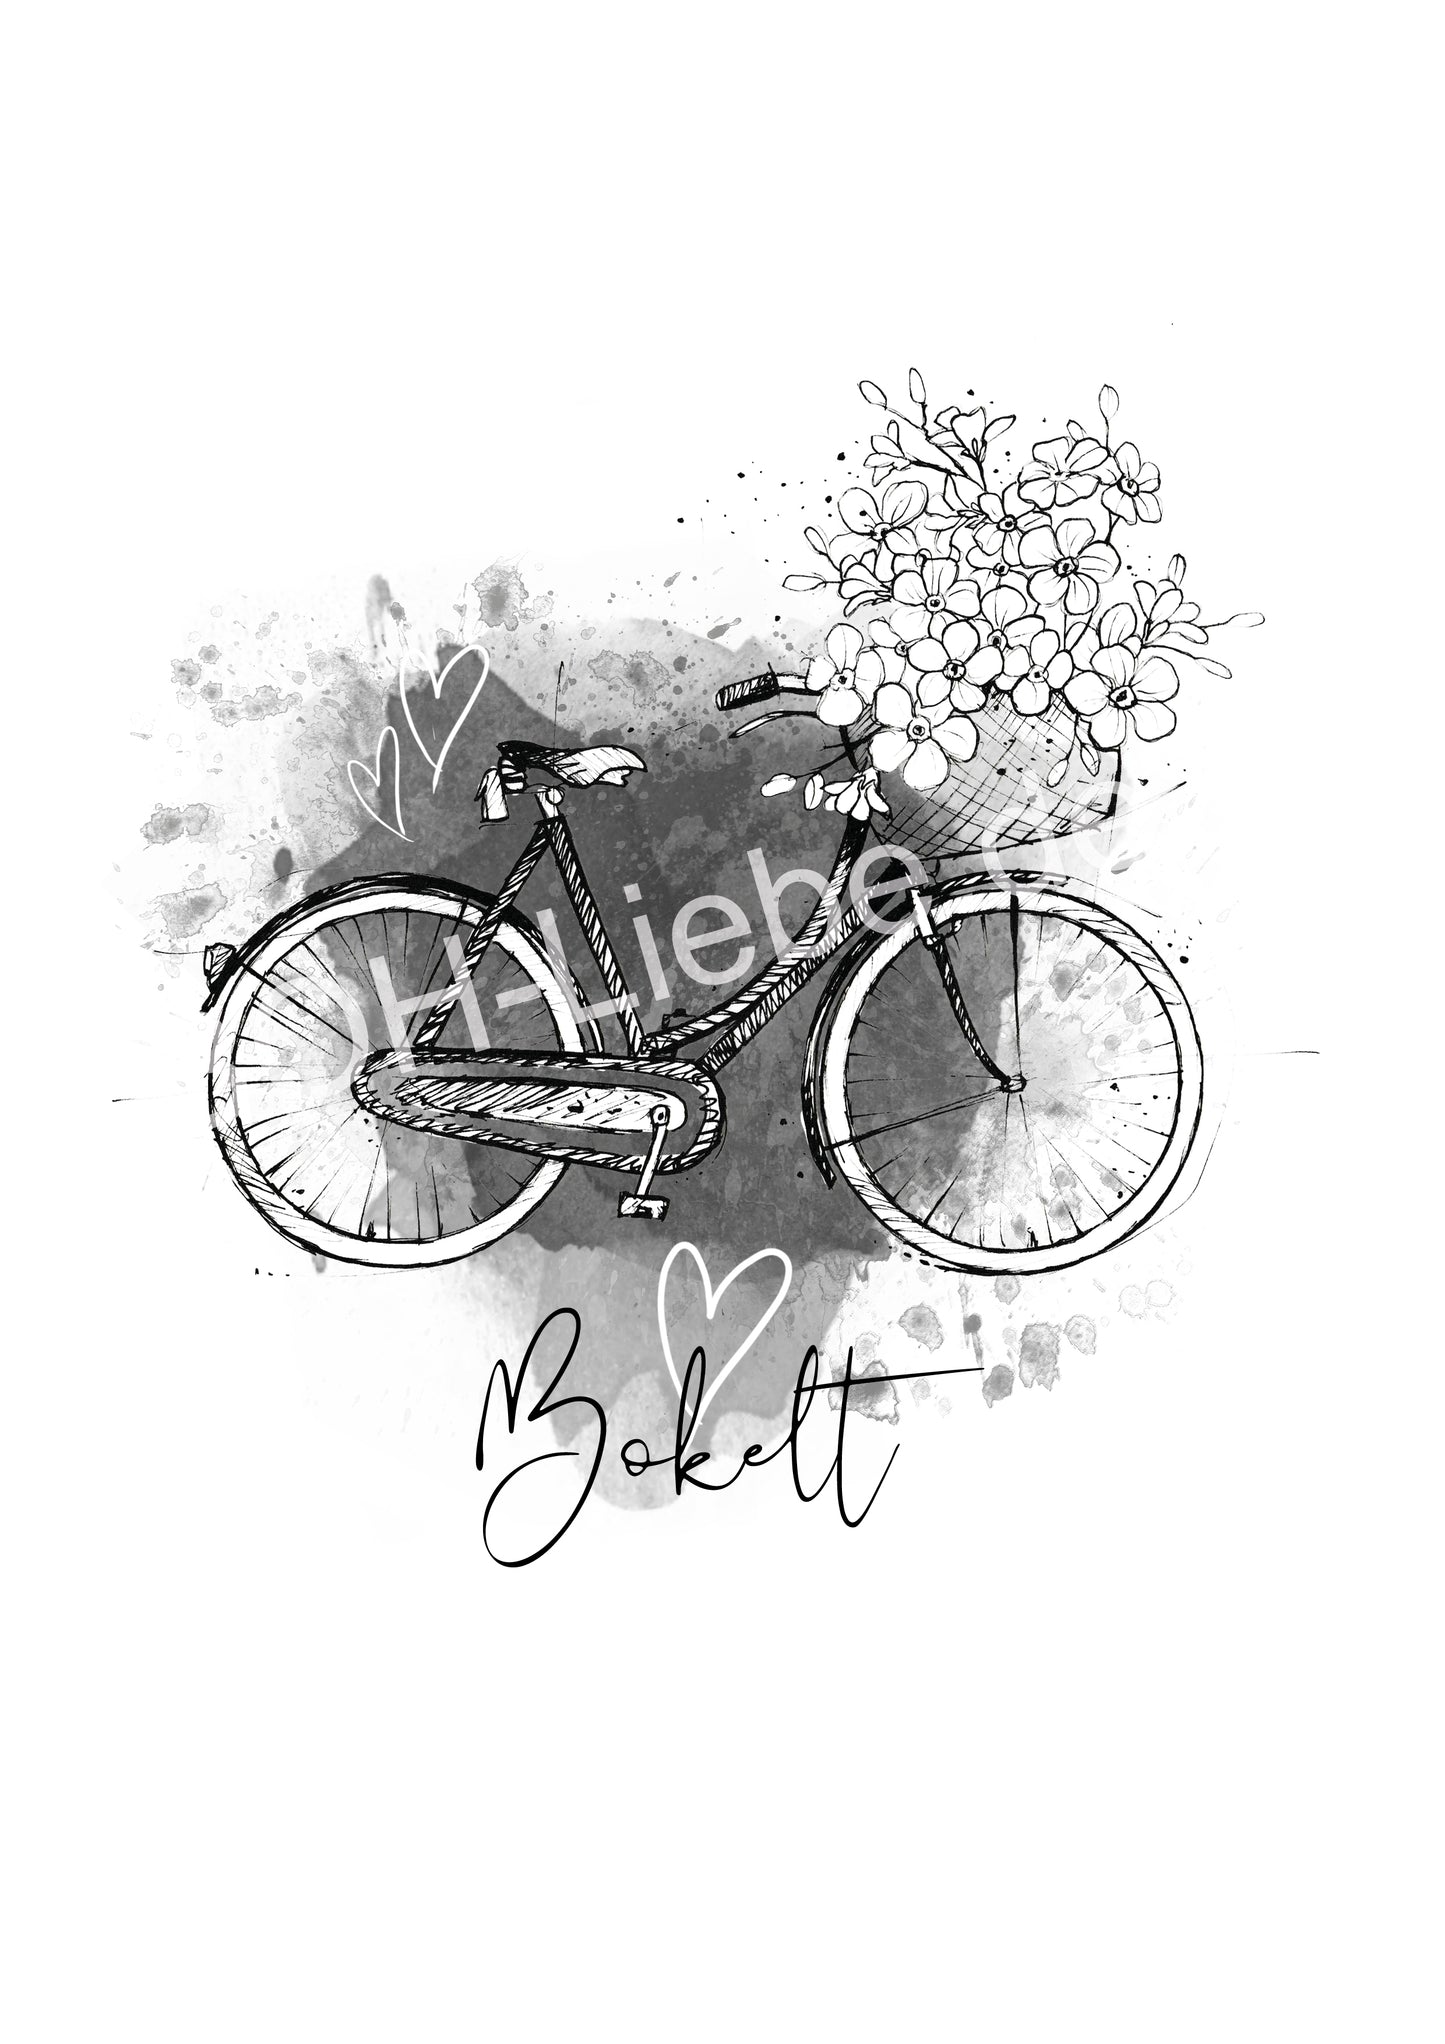 Blümchen Fahrrad "Bokelt"